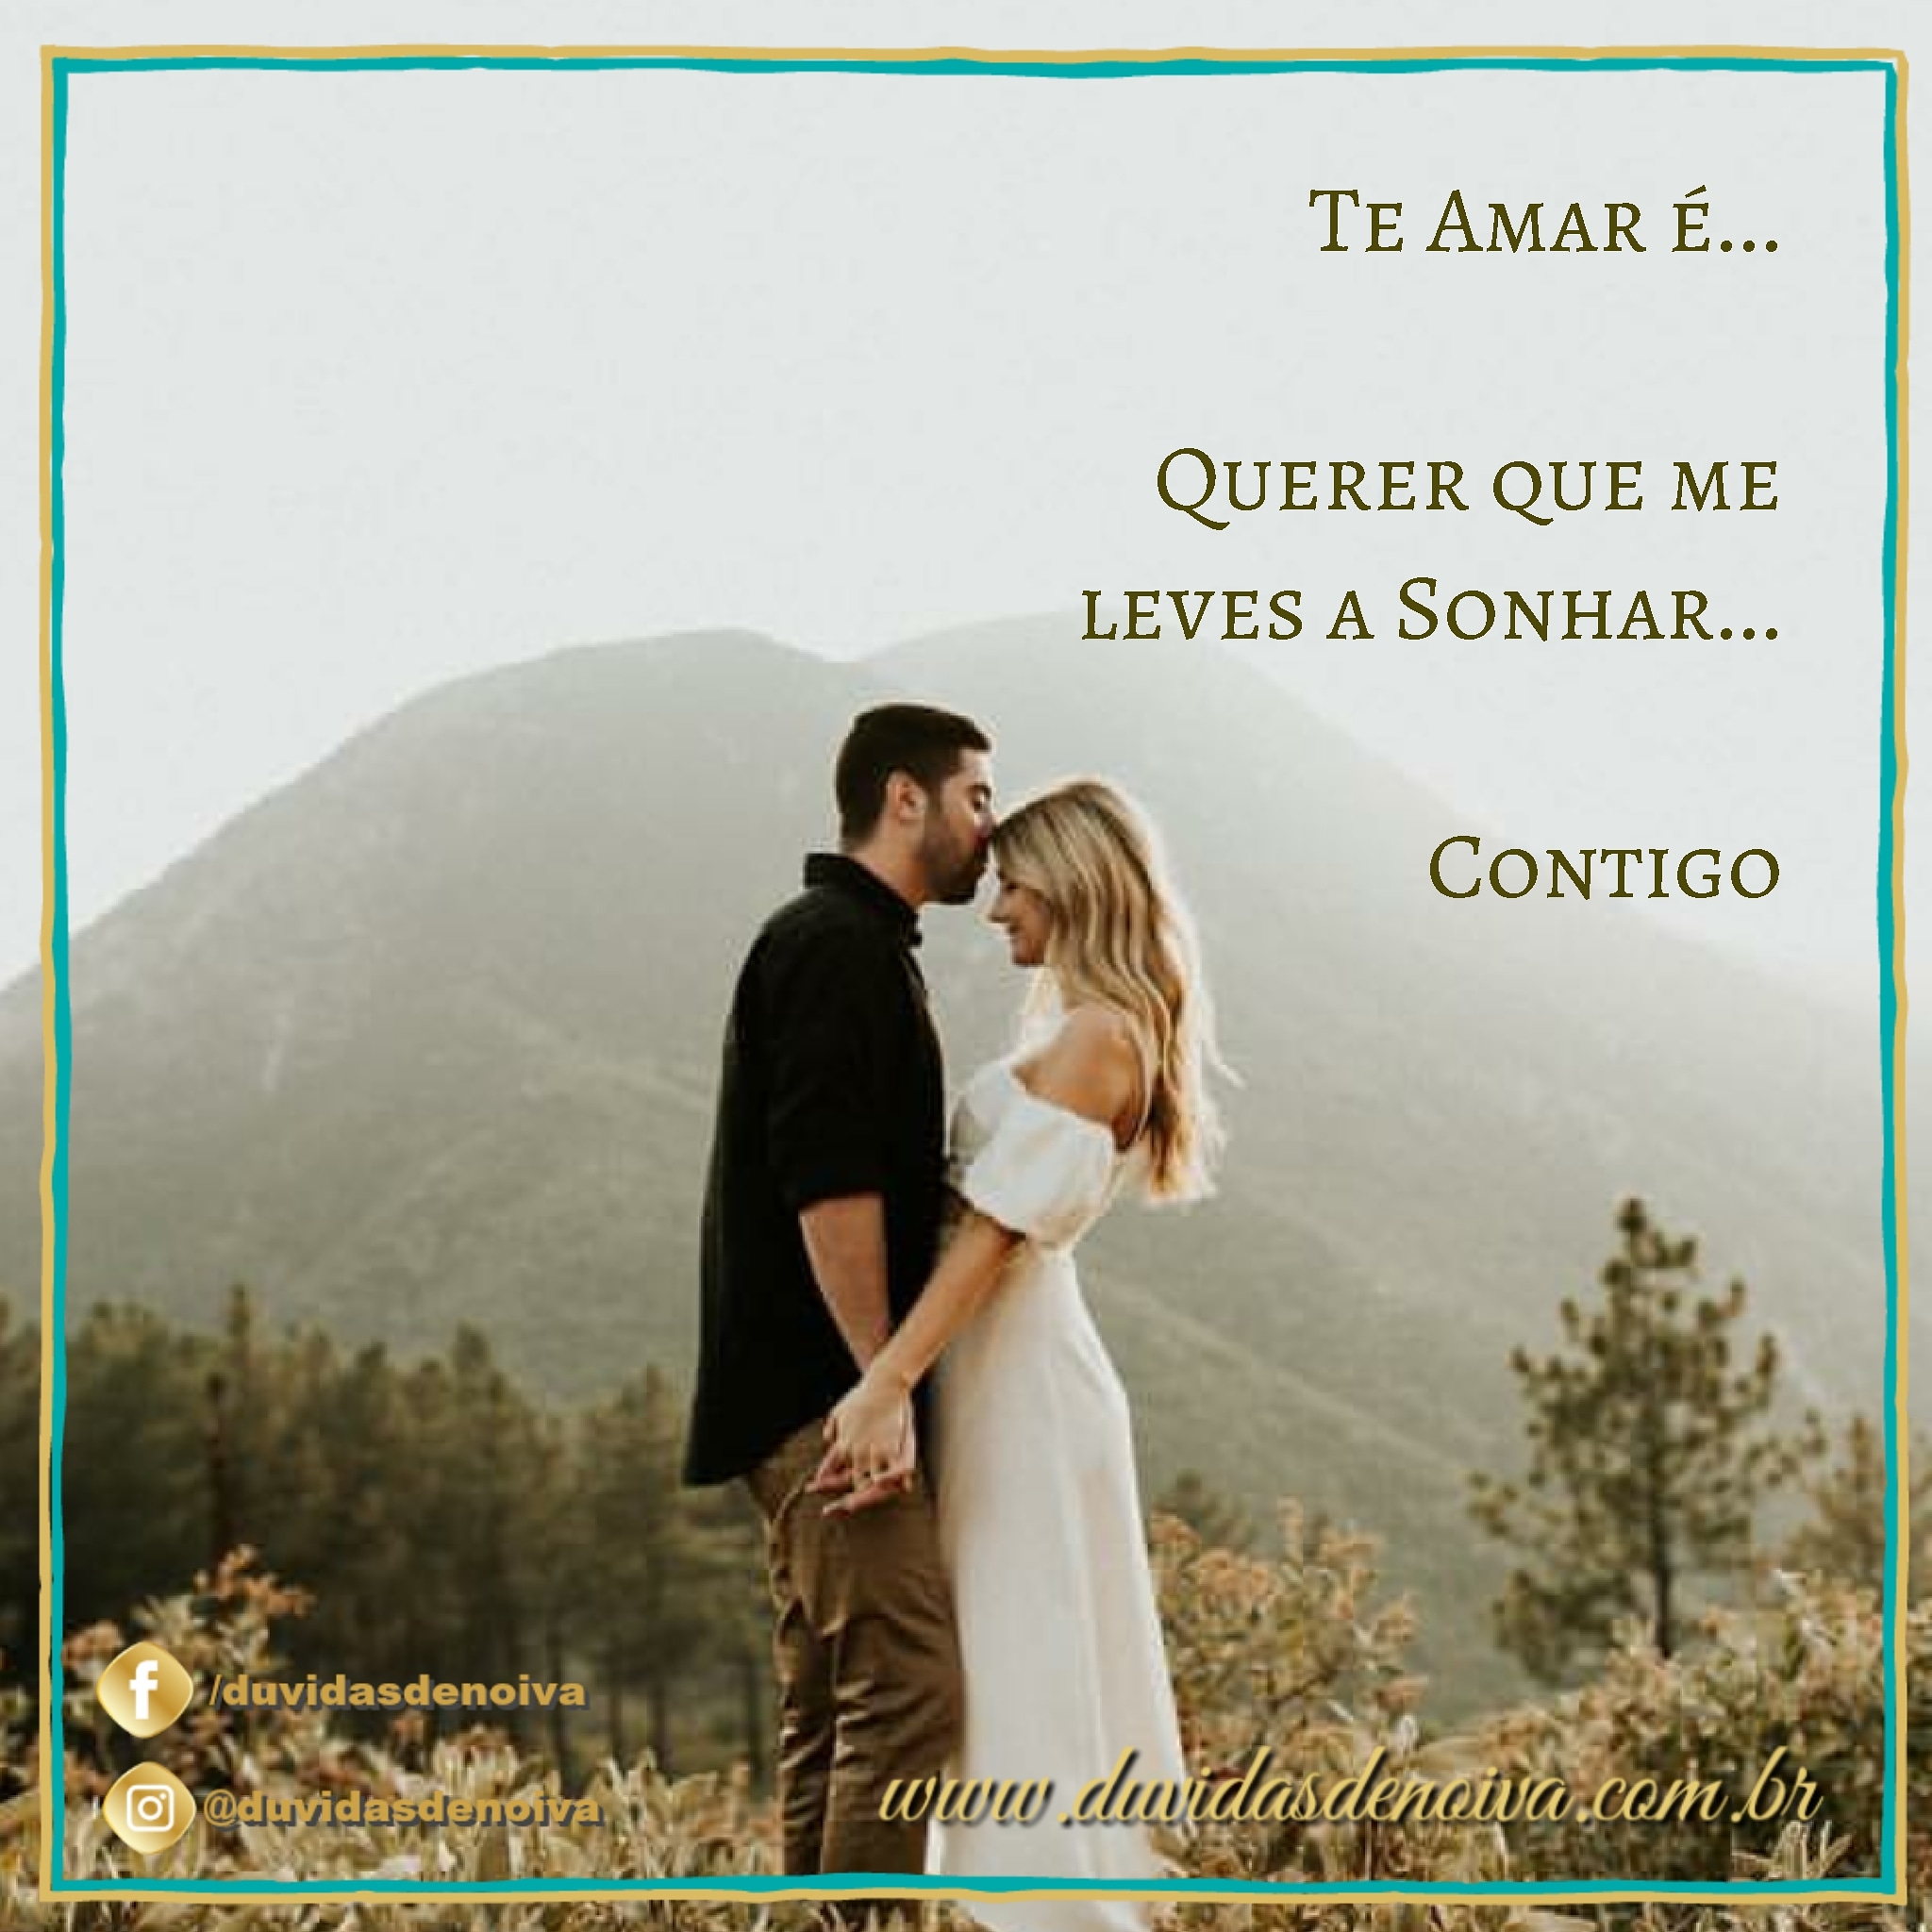 IMG 20190111 121611 938 - Te Amar é... Posts de Amor